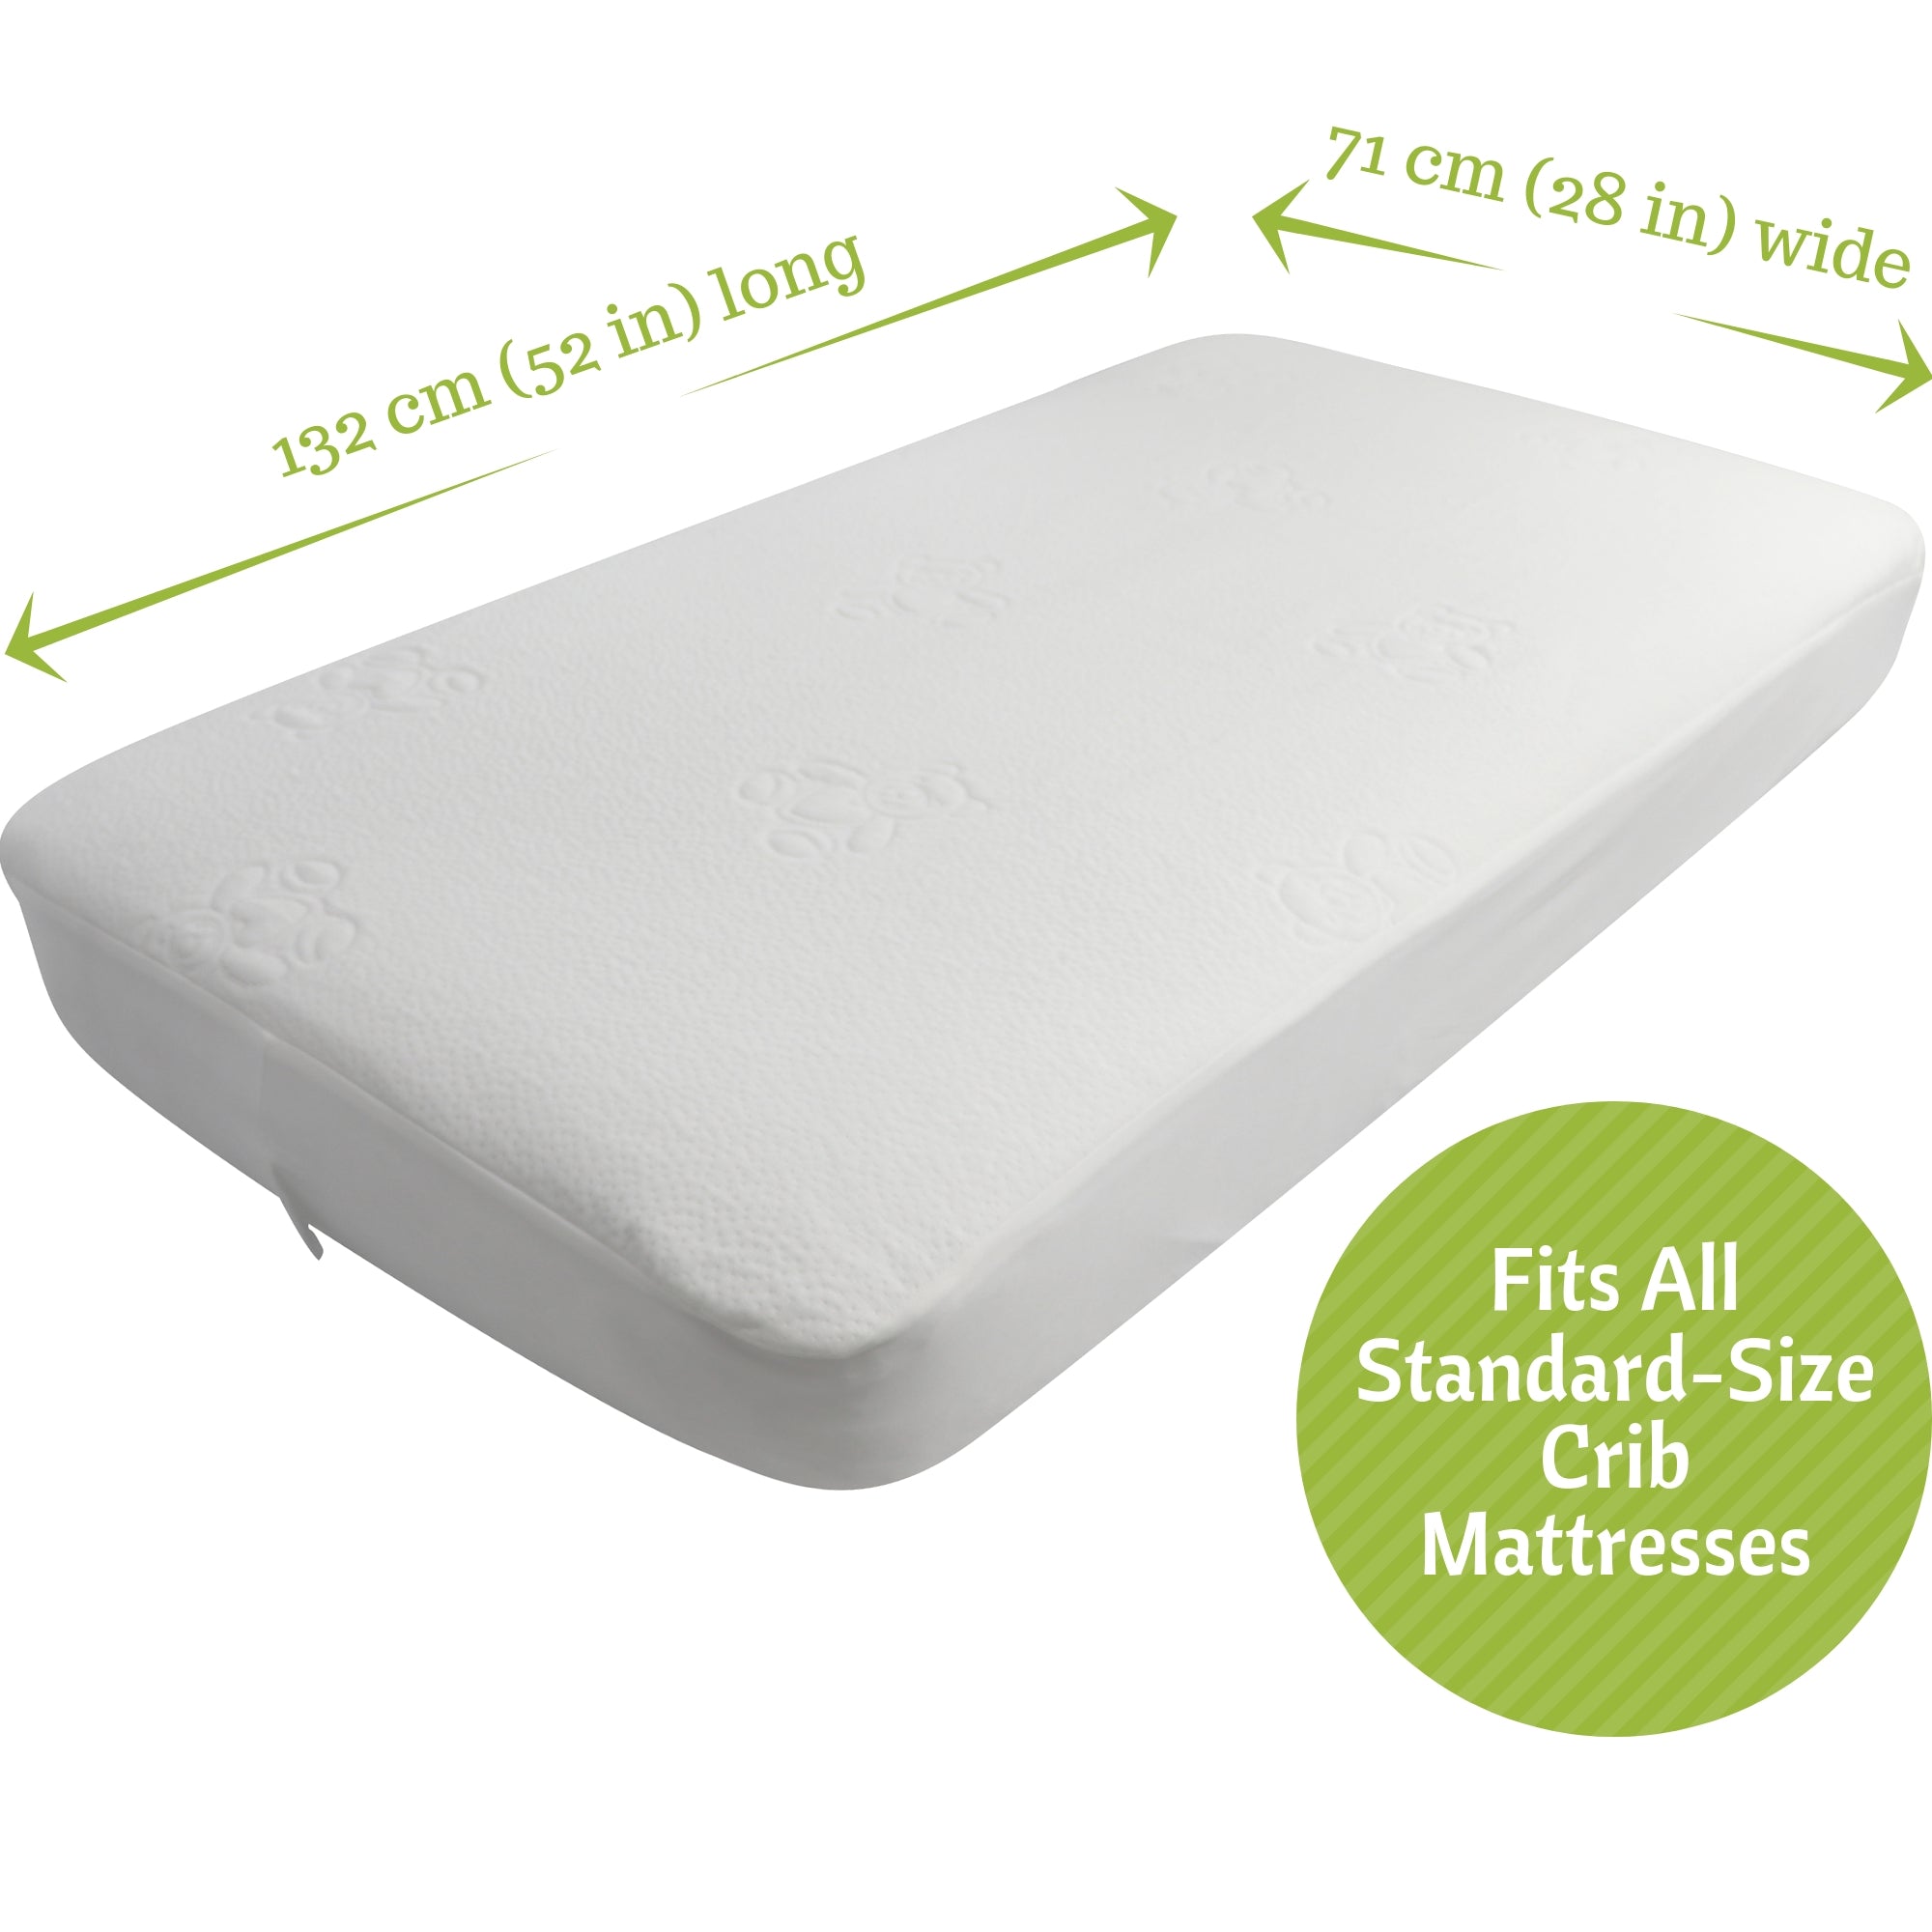 plastic cover for crib mattress